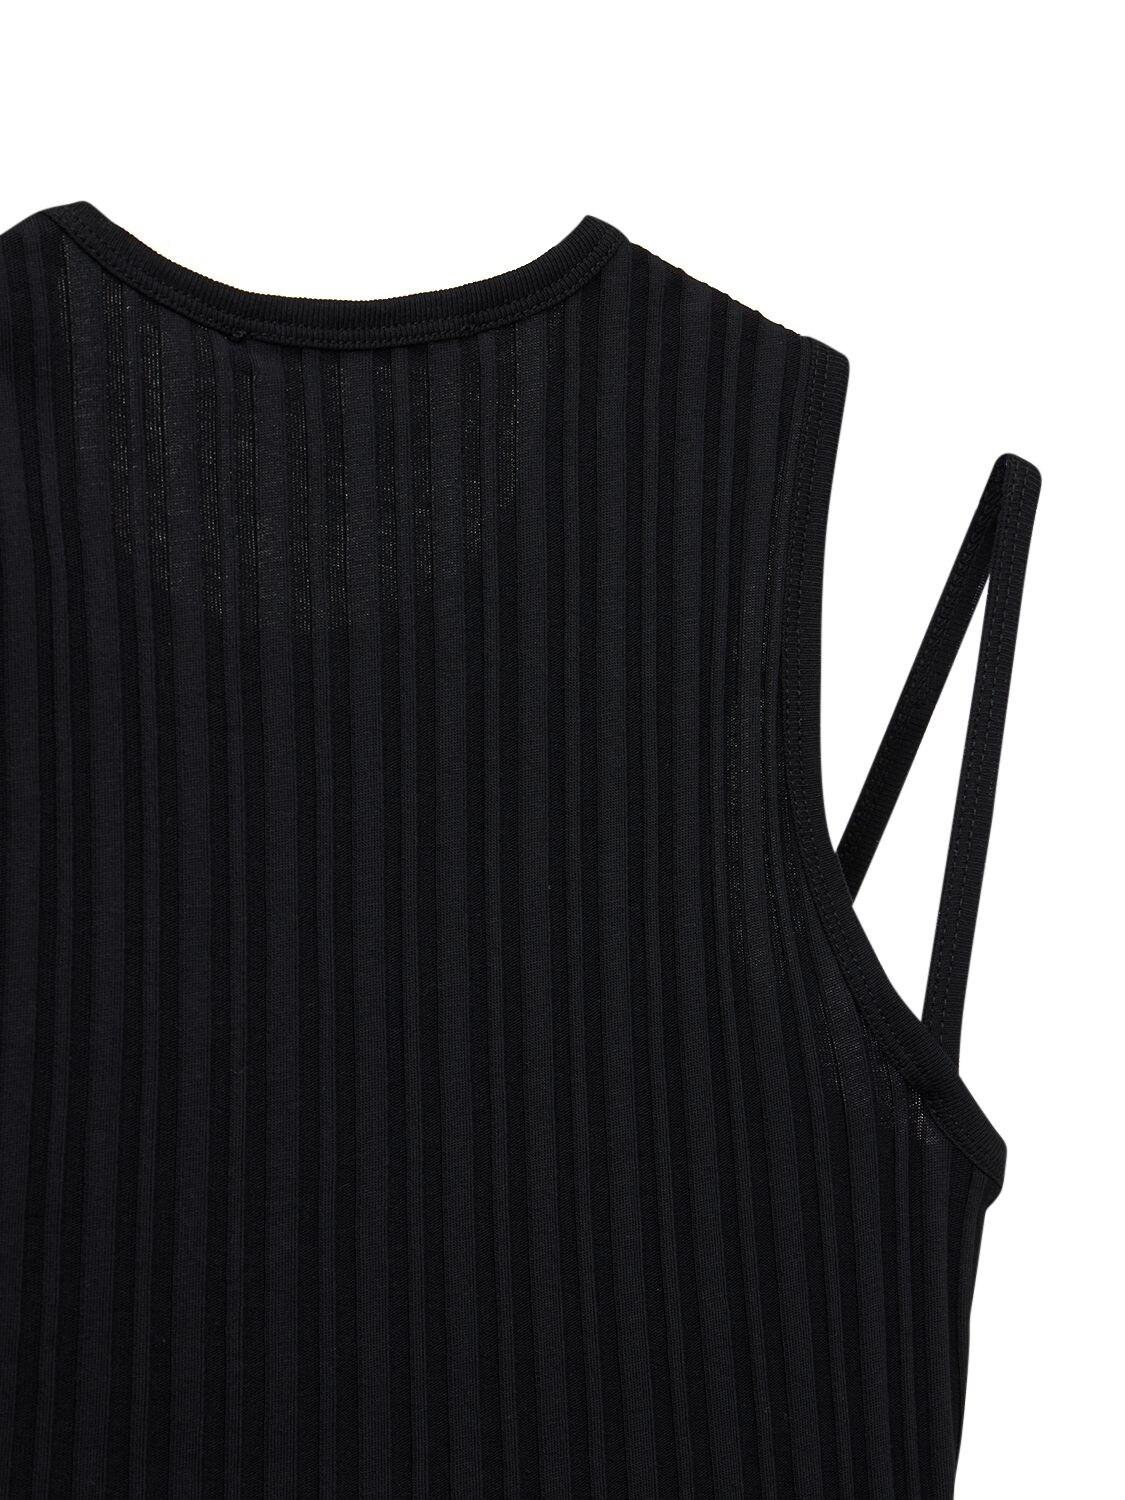 Helmut Lang Cotton Knit Rib Tank Top W/straps in Black | Lyst